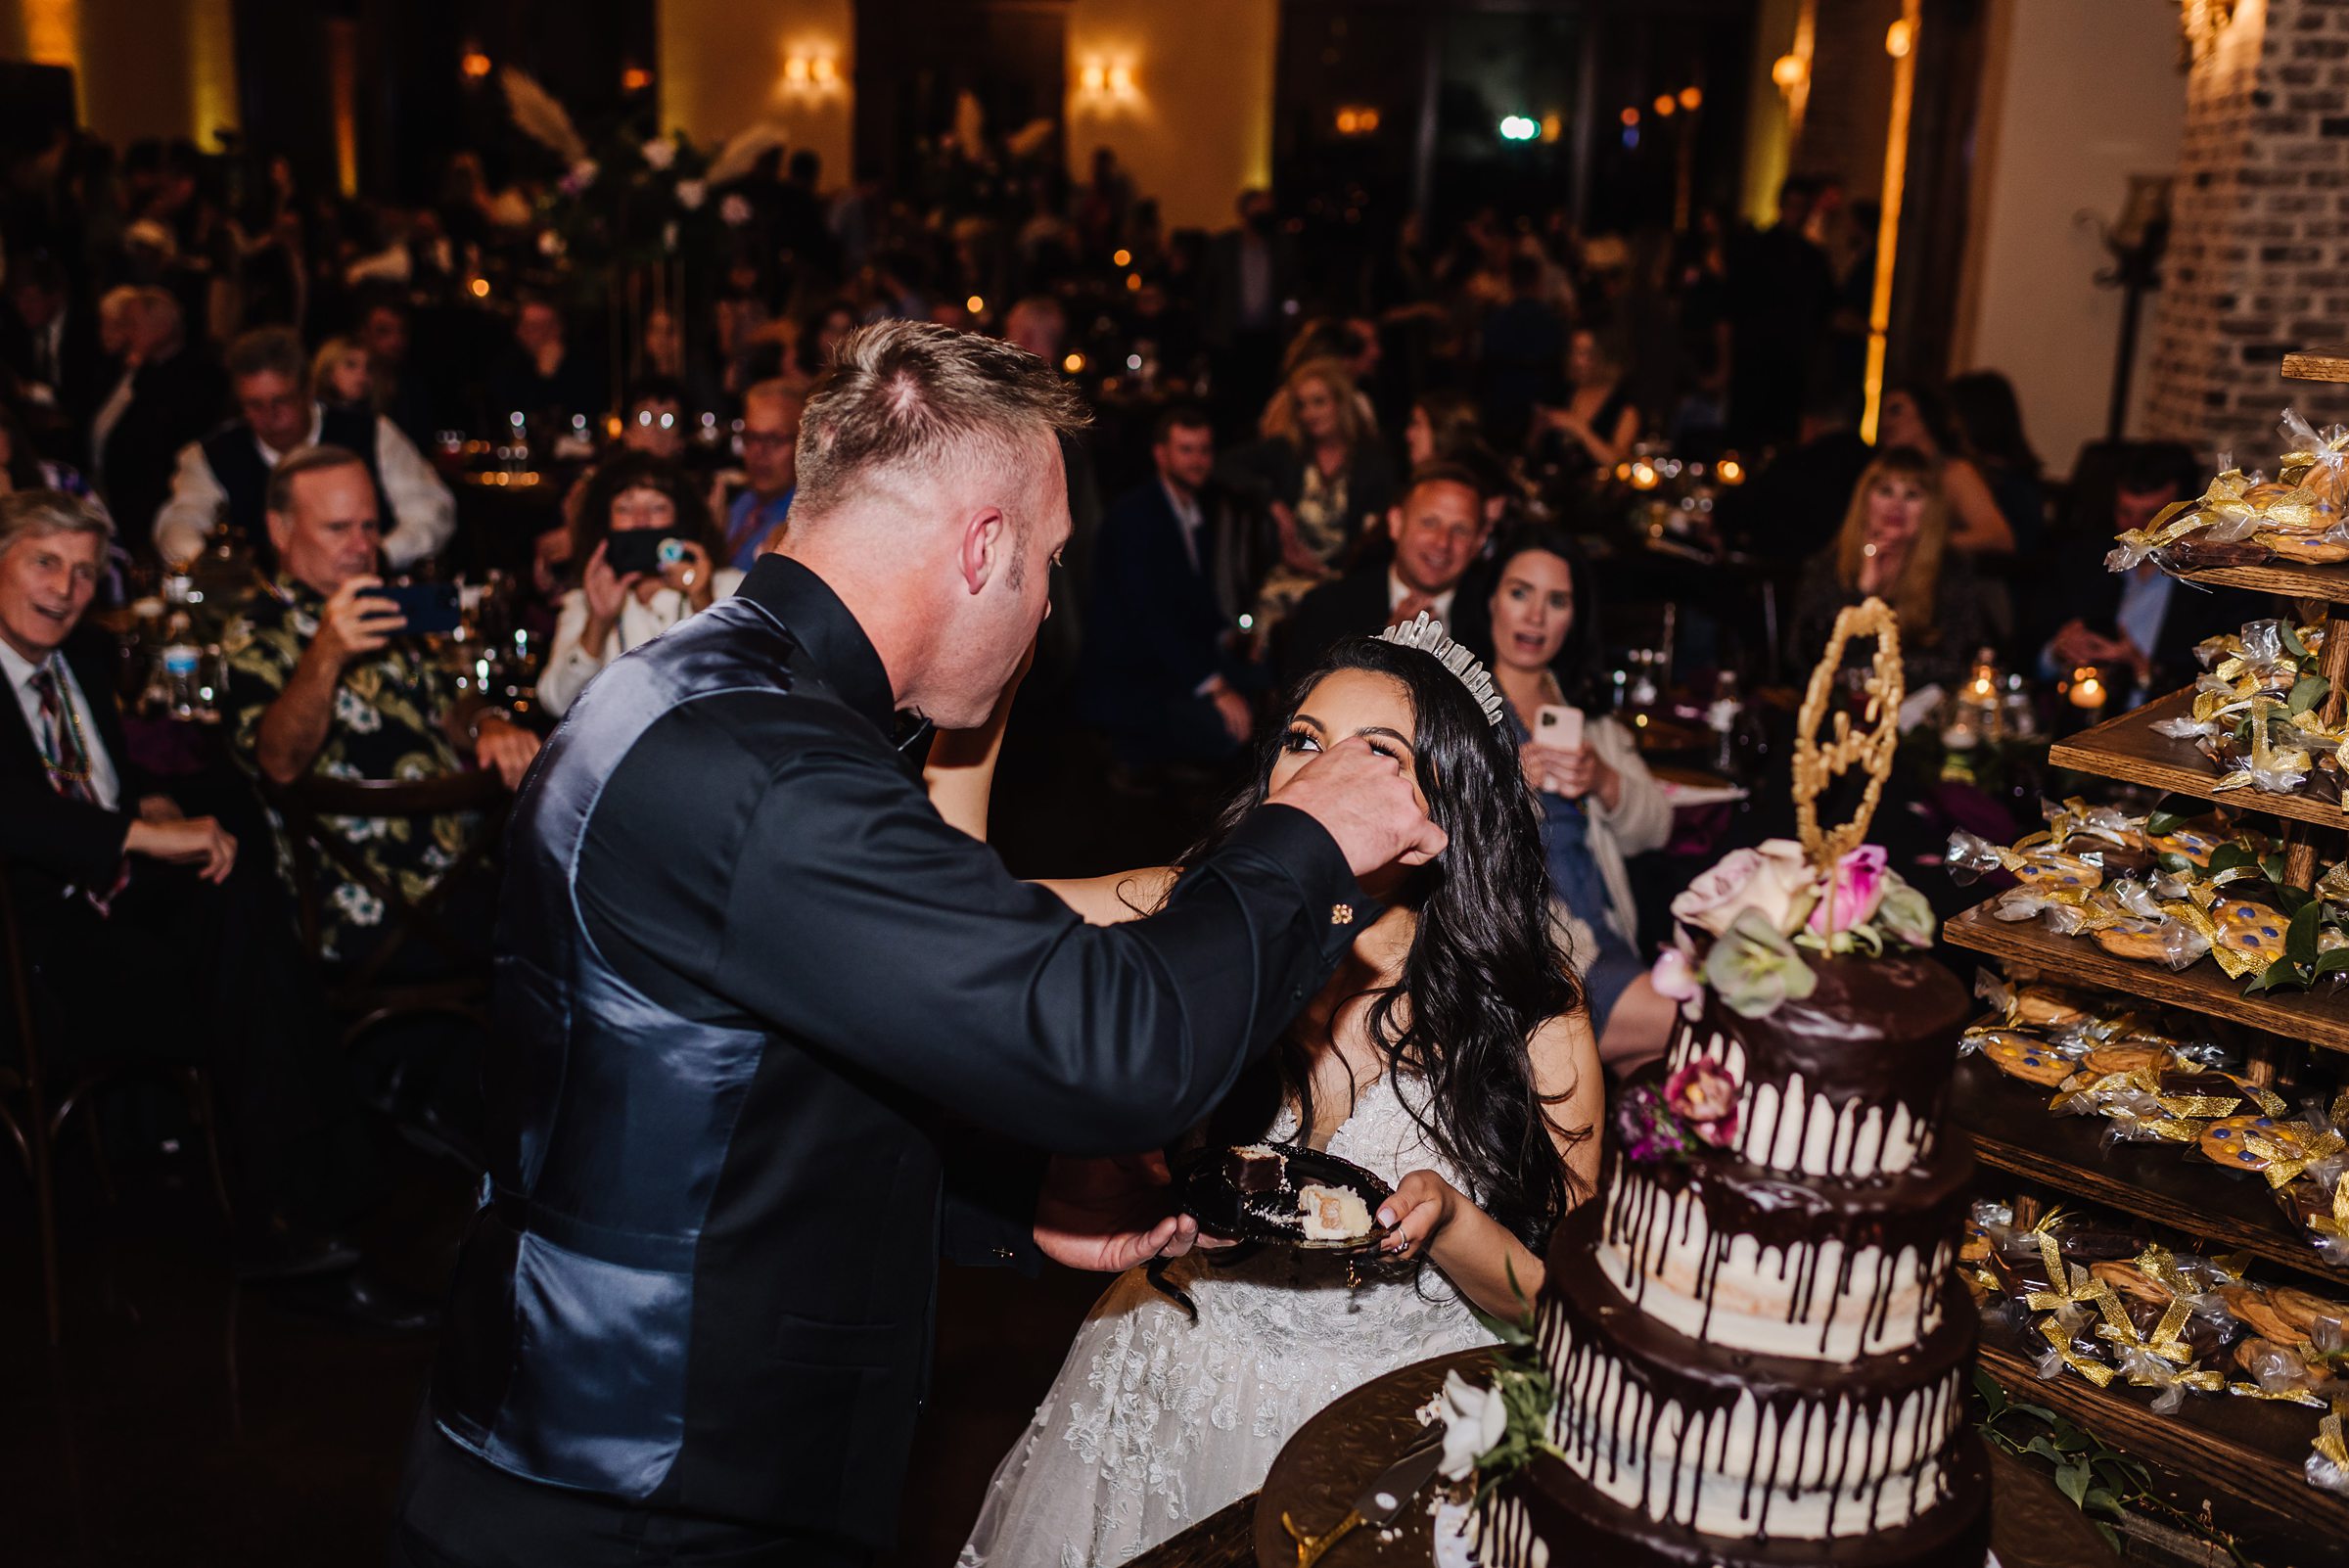 bride and groom cutting wedding cake